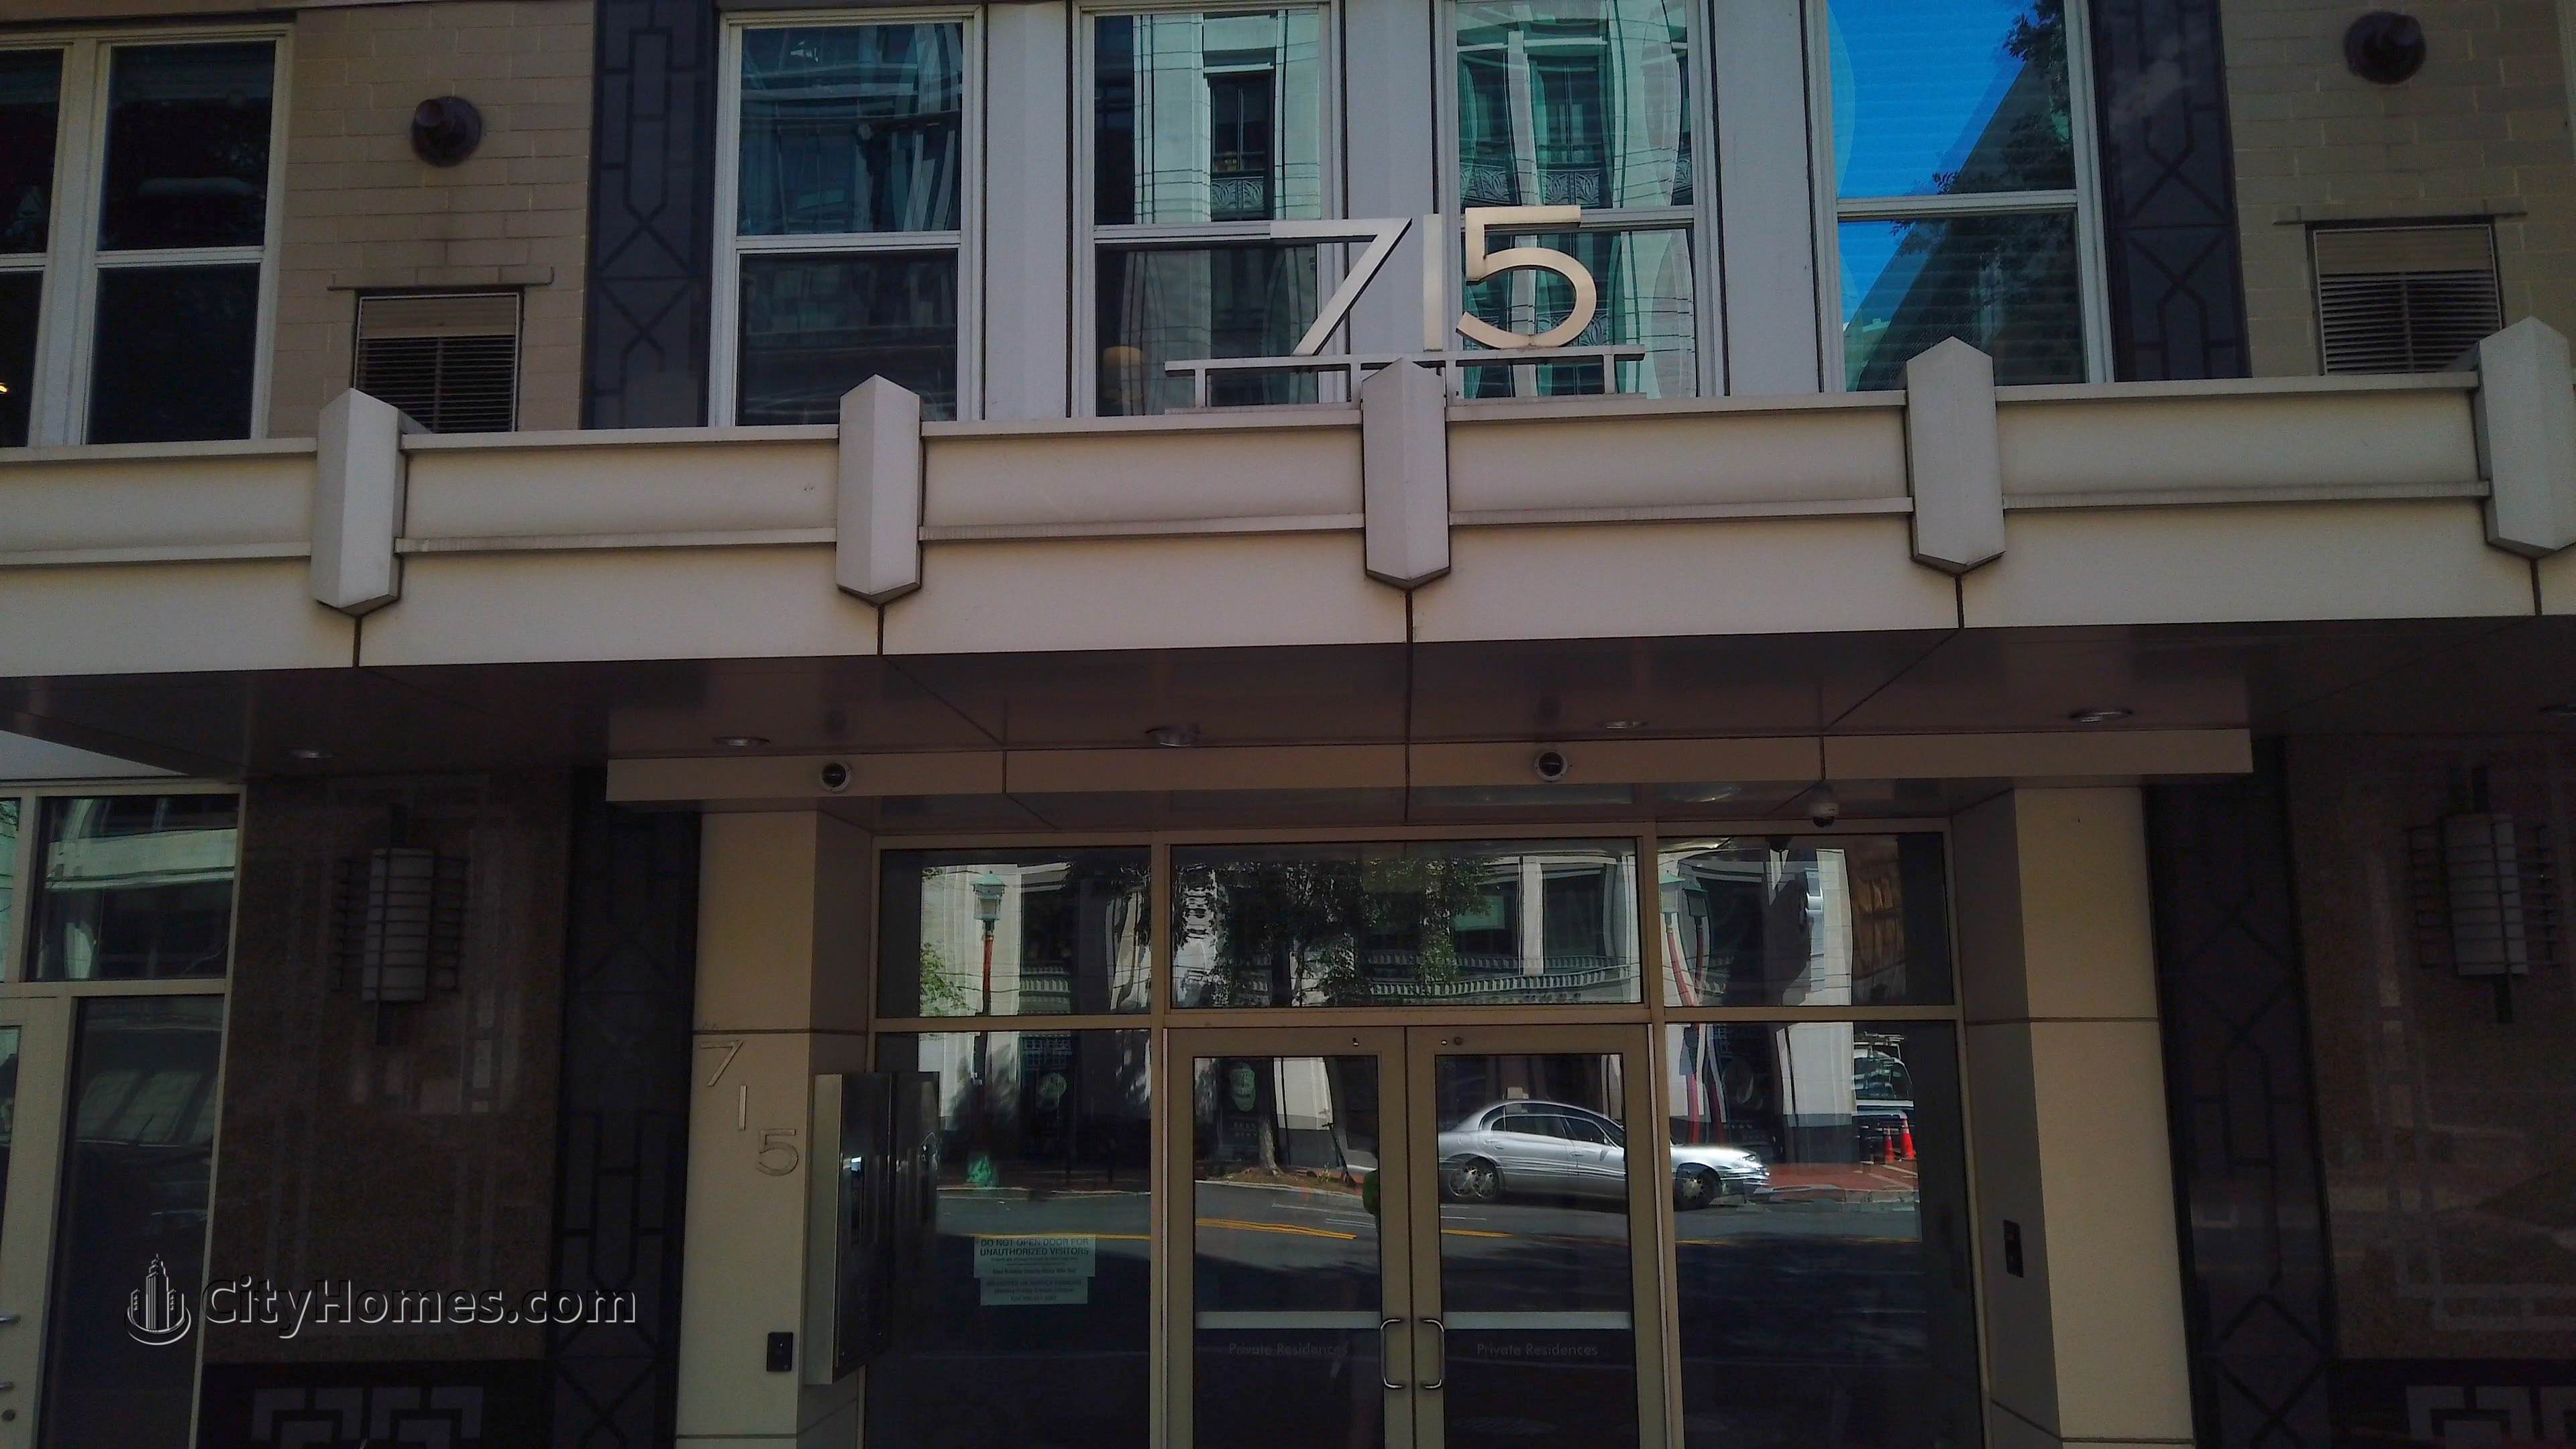 The Cosmopolitan xây dựng tại 715 6th St NW, Chinatown, Washington, DC 20001